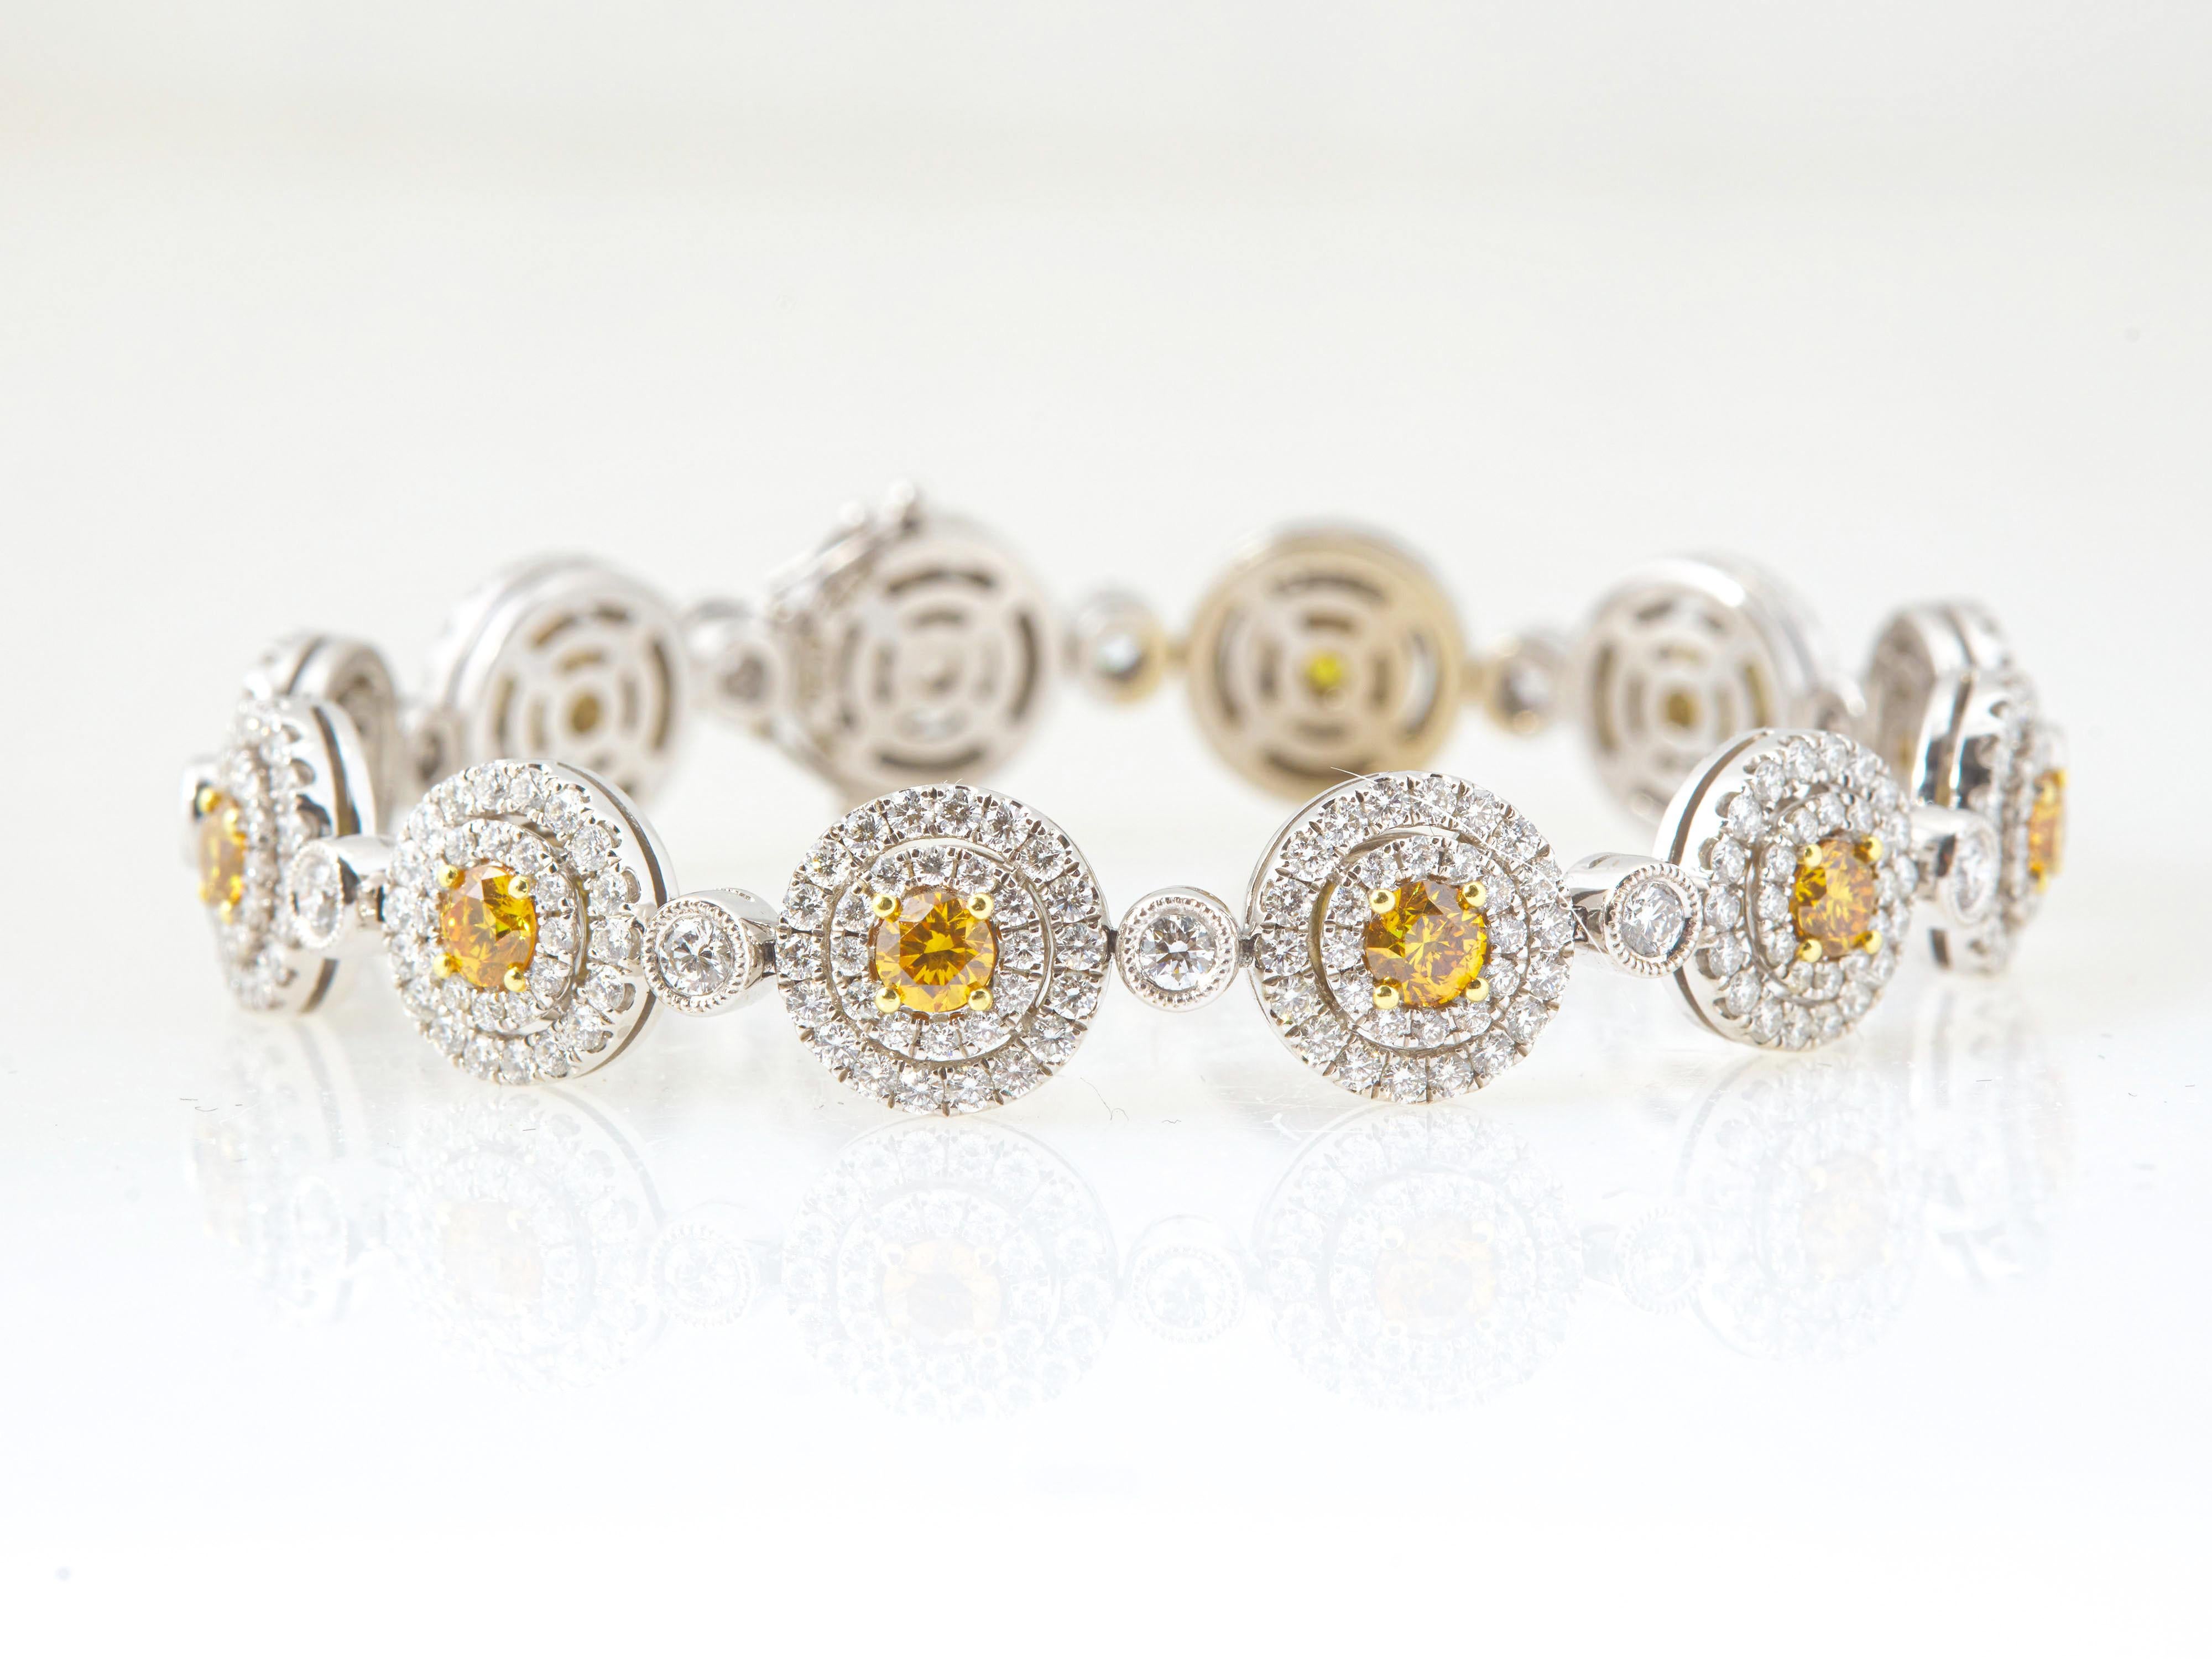 A stunning 10.74 carat Round Brilliant Fancy Vivid-Intense Orange-Yellow diamond halo bracelet, featuring 2.92 fancy vivid-Intense yellow diamonds set in prongs, GIA certified. The diamonds are accented with 360 round brilliant white diamonds at